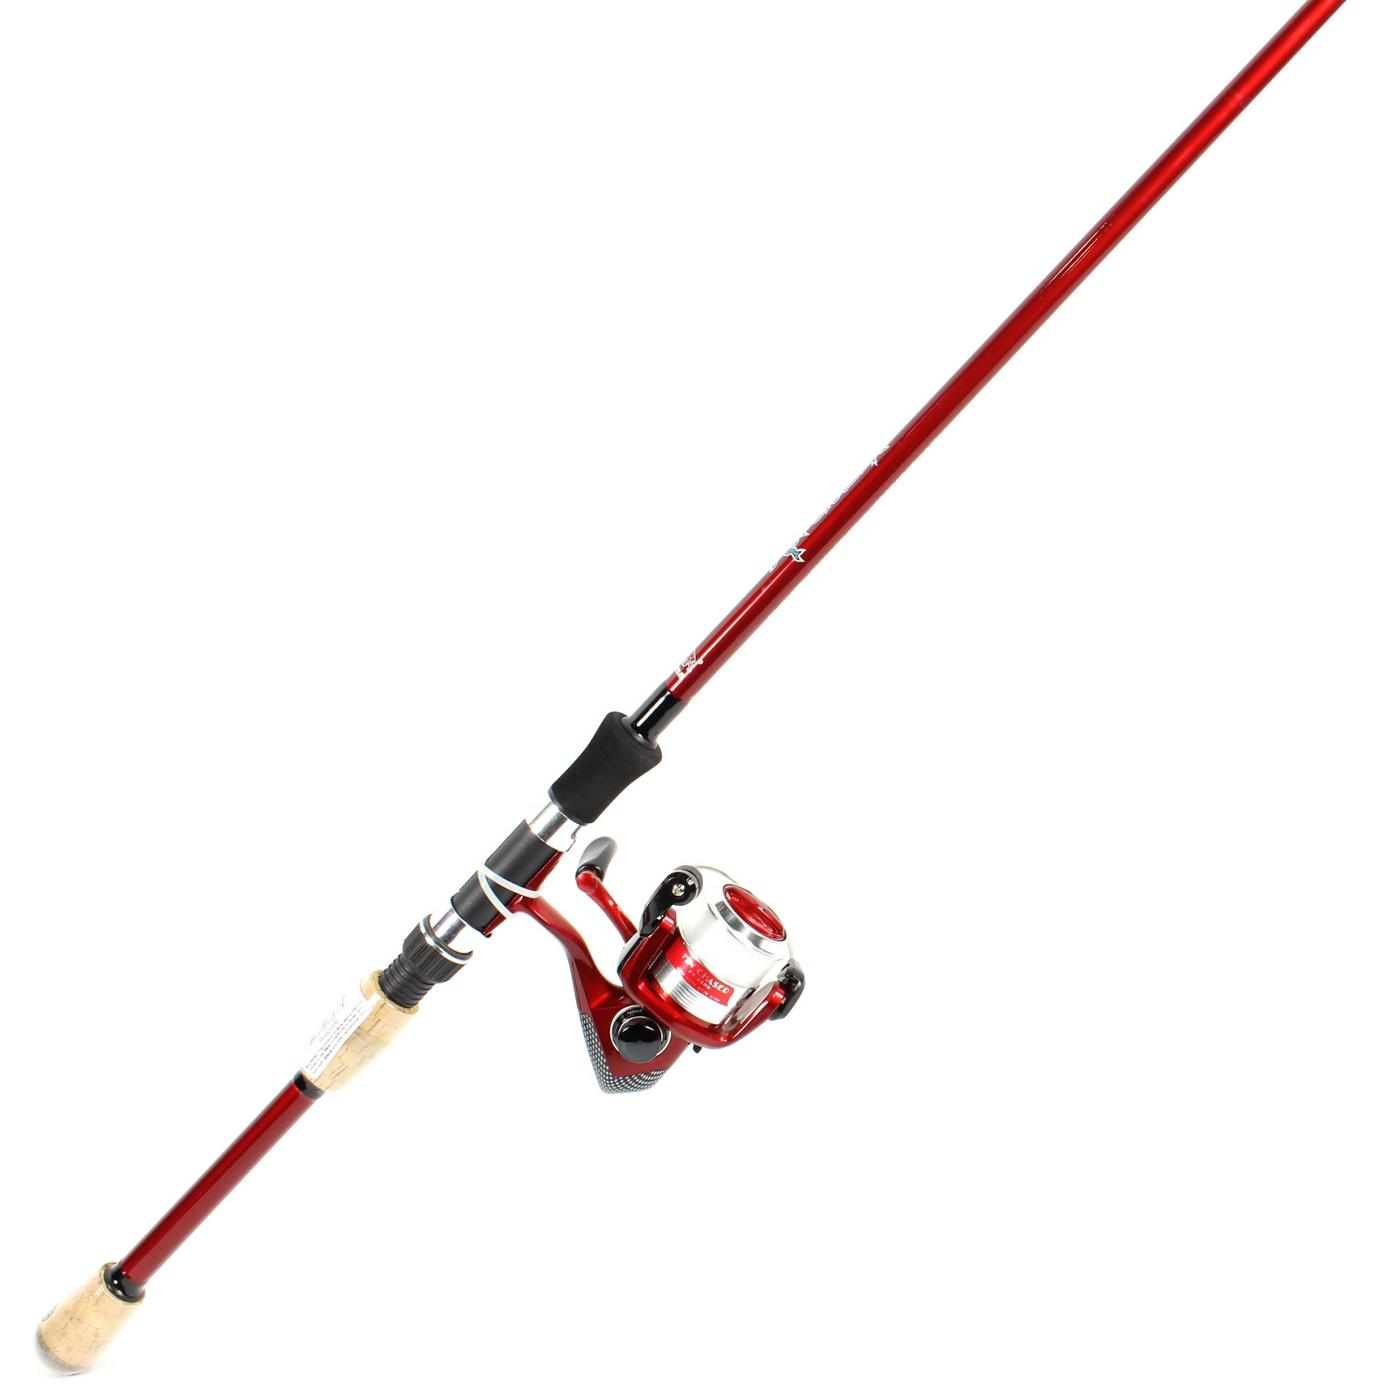 Okuma 6' 6 Spinning Fishing Combo Rod - Shop Fishing at H-E-B